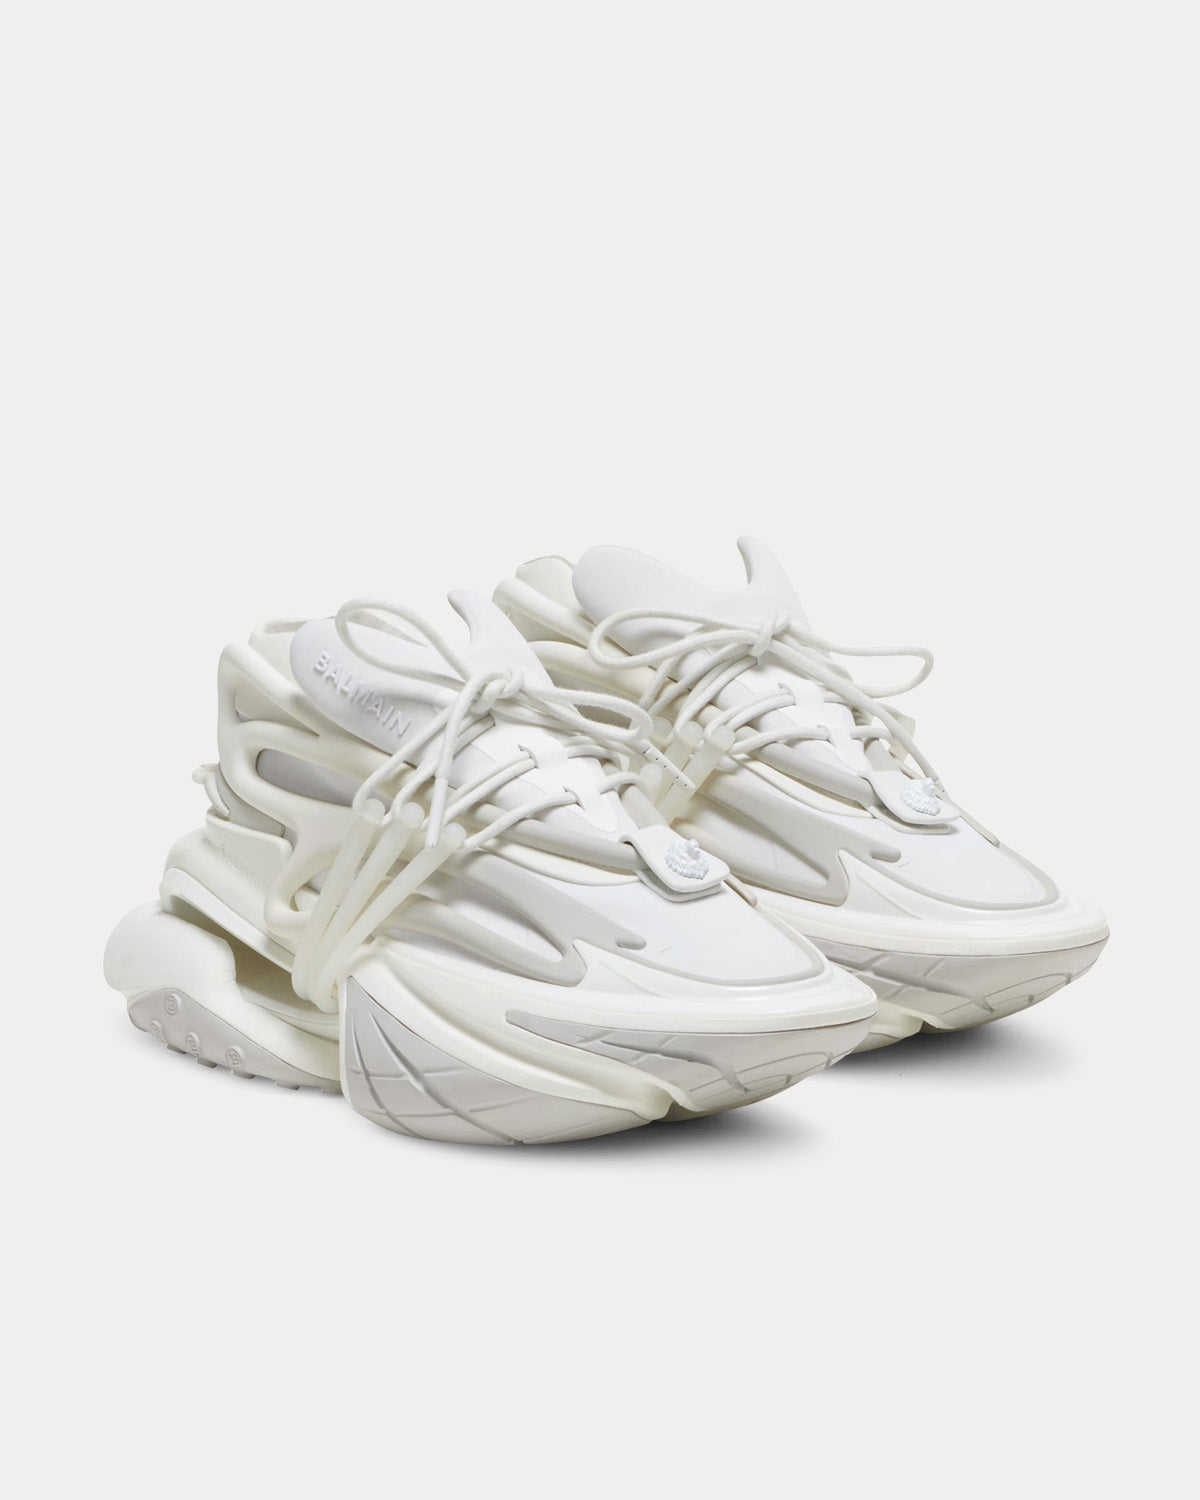 Balmain - Unicorn Neoprene & Leather White Low Top Sneakers